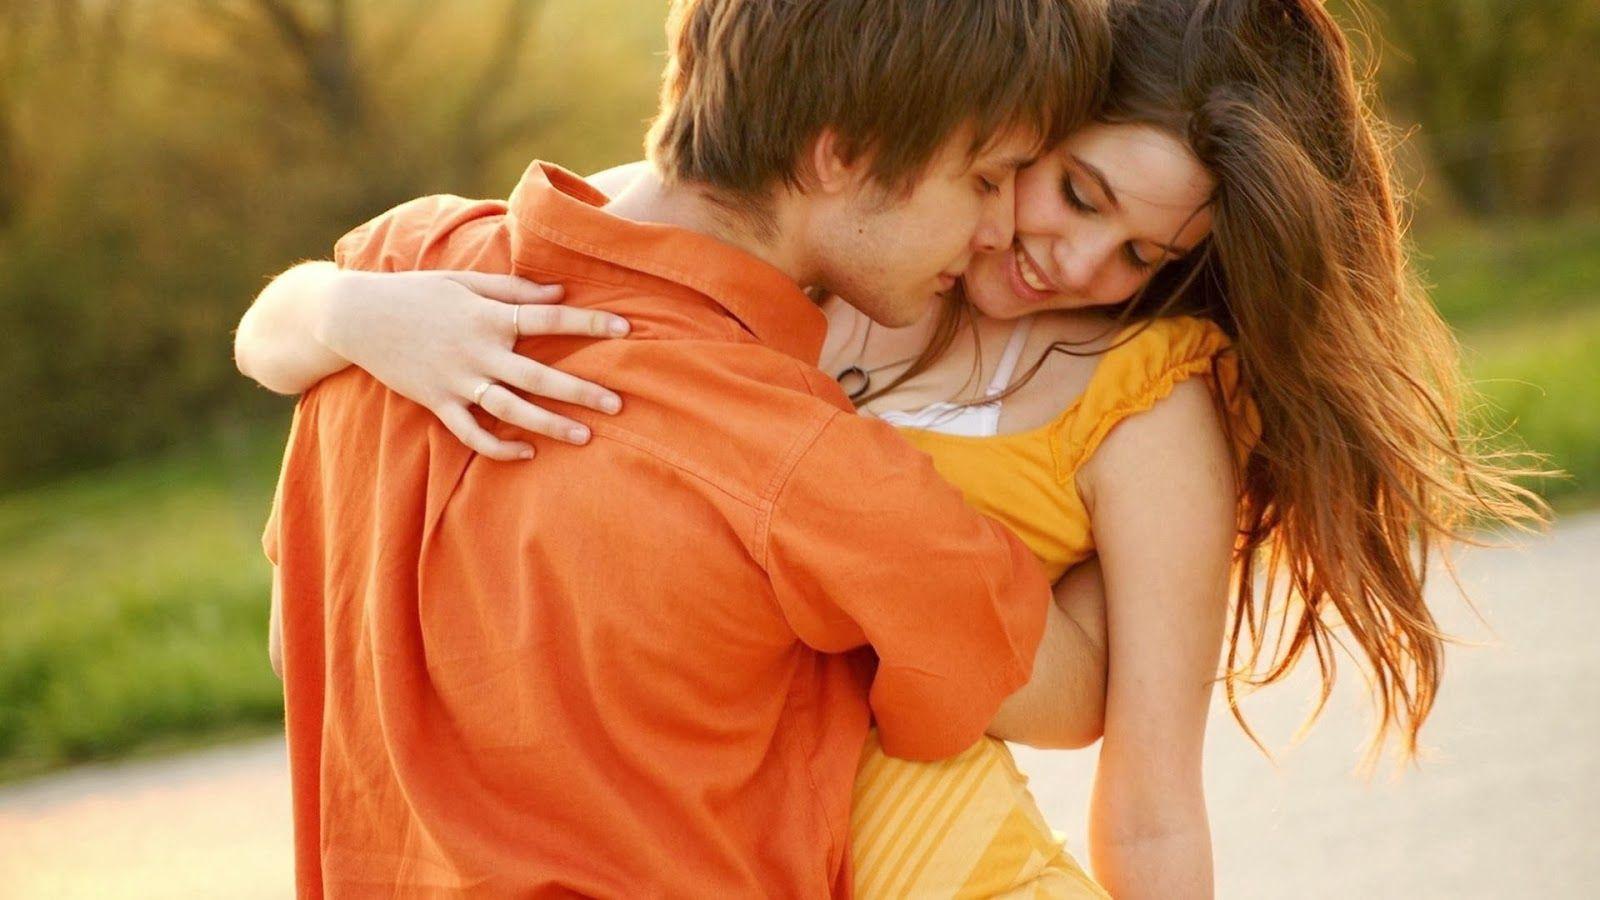 Lover Hug Romantic Couple Desktop HD Wallpaper 2014